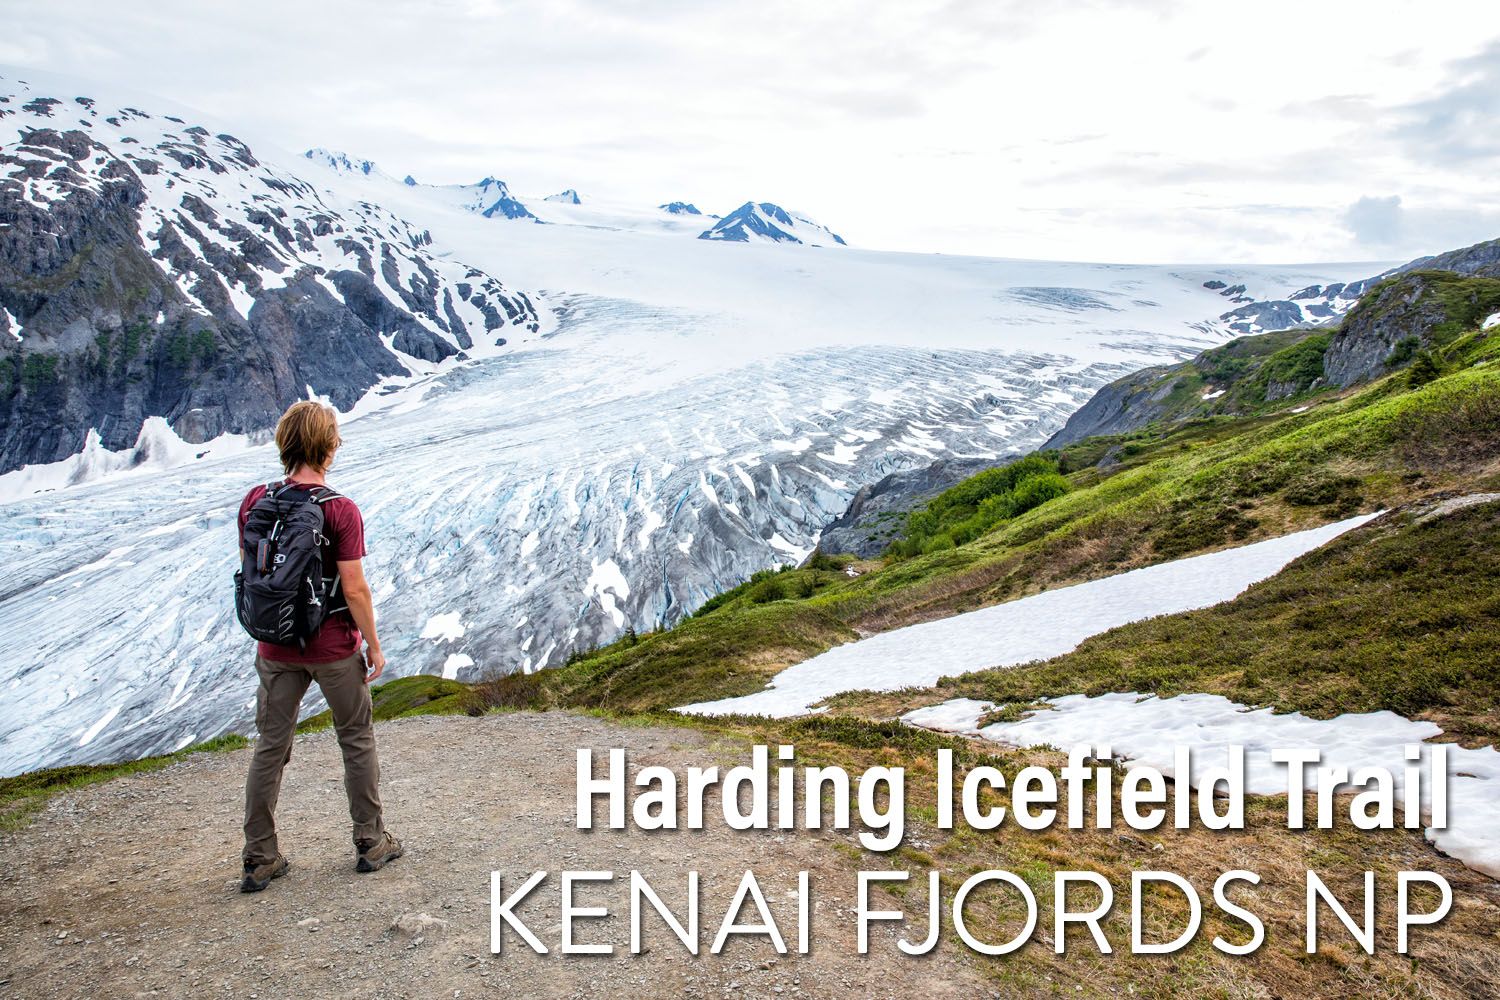 Harding Icefield Trail Kenai Fjords